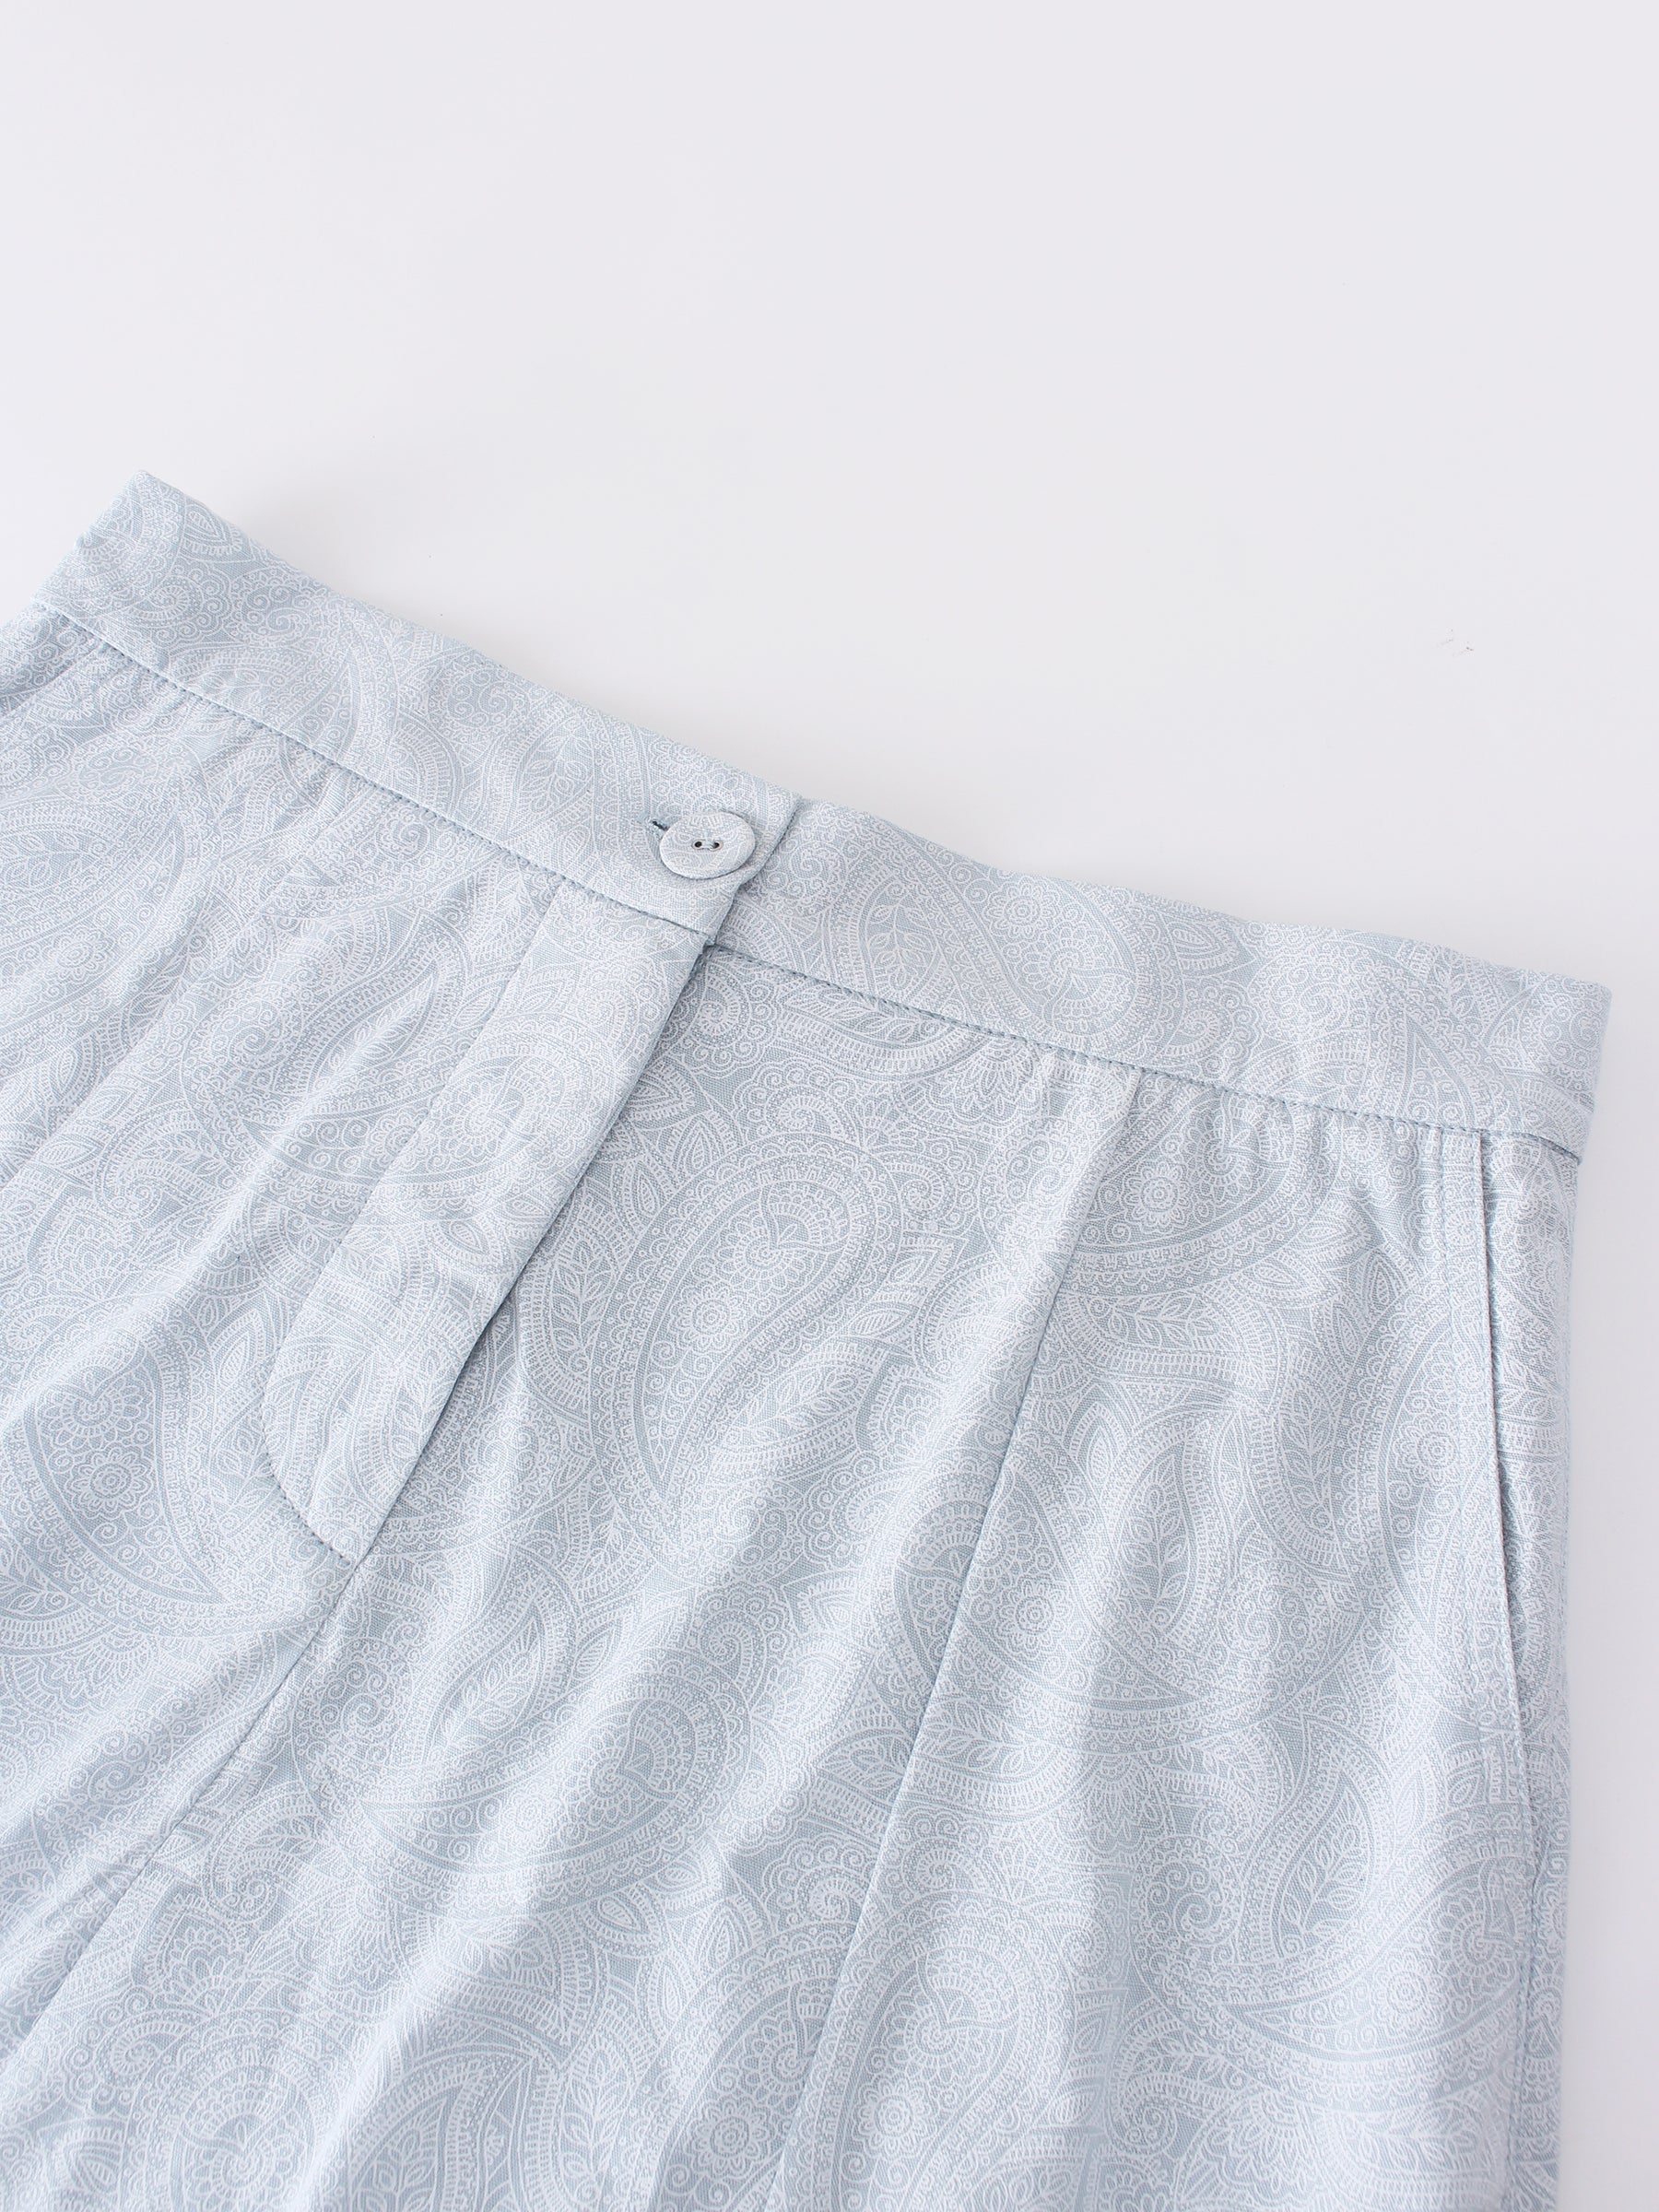 Pattern A-Line Seamed Skirt-Light Blue Paisley